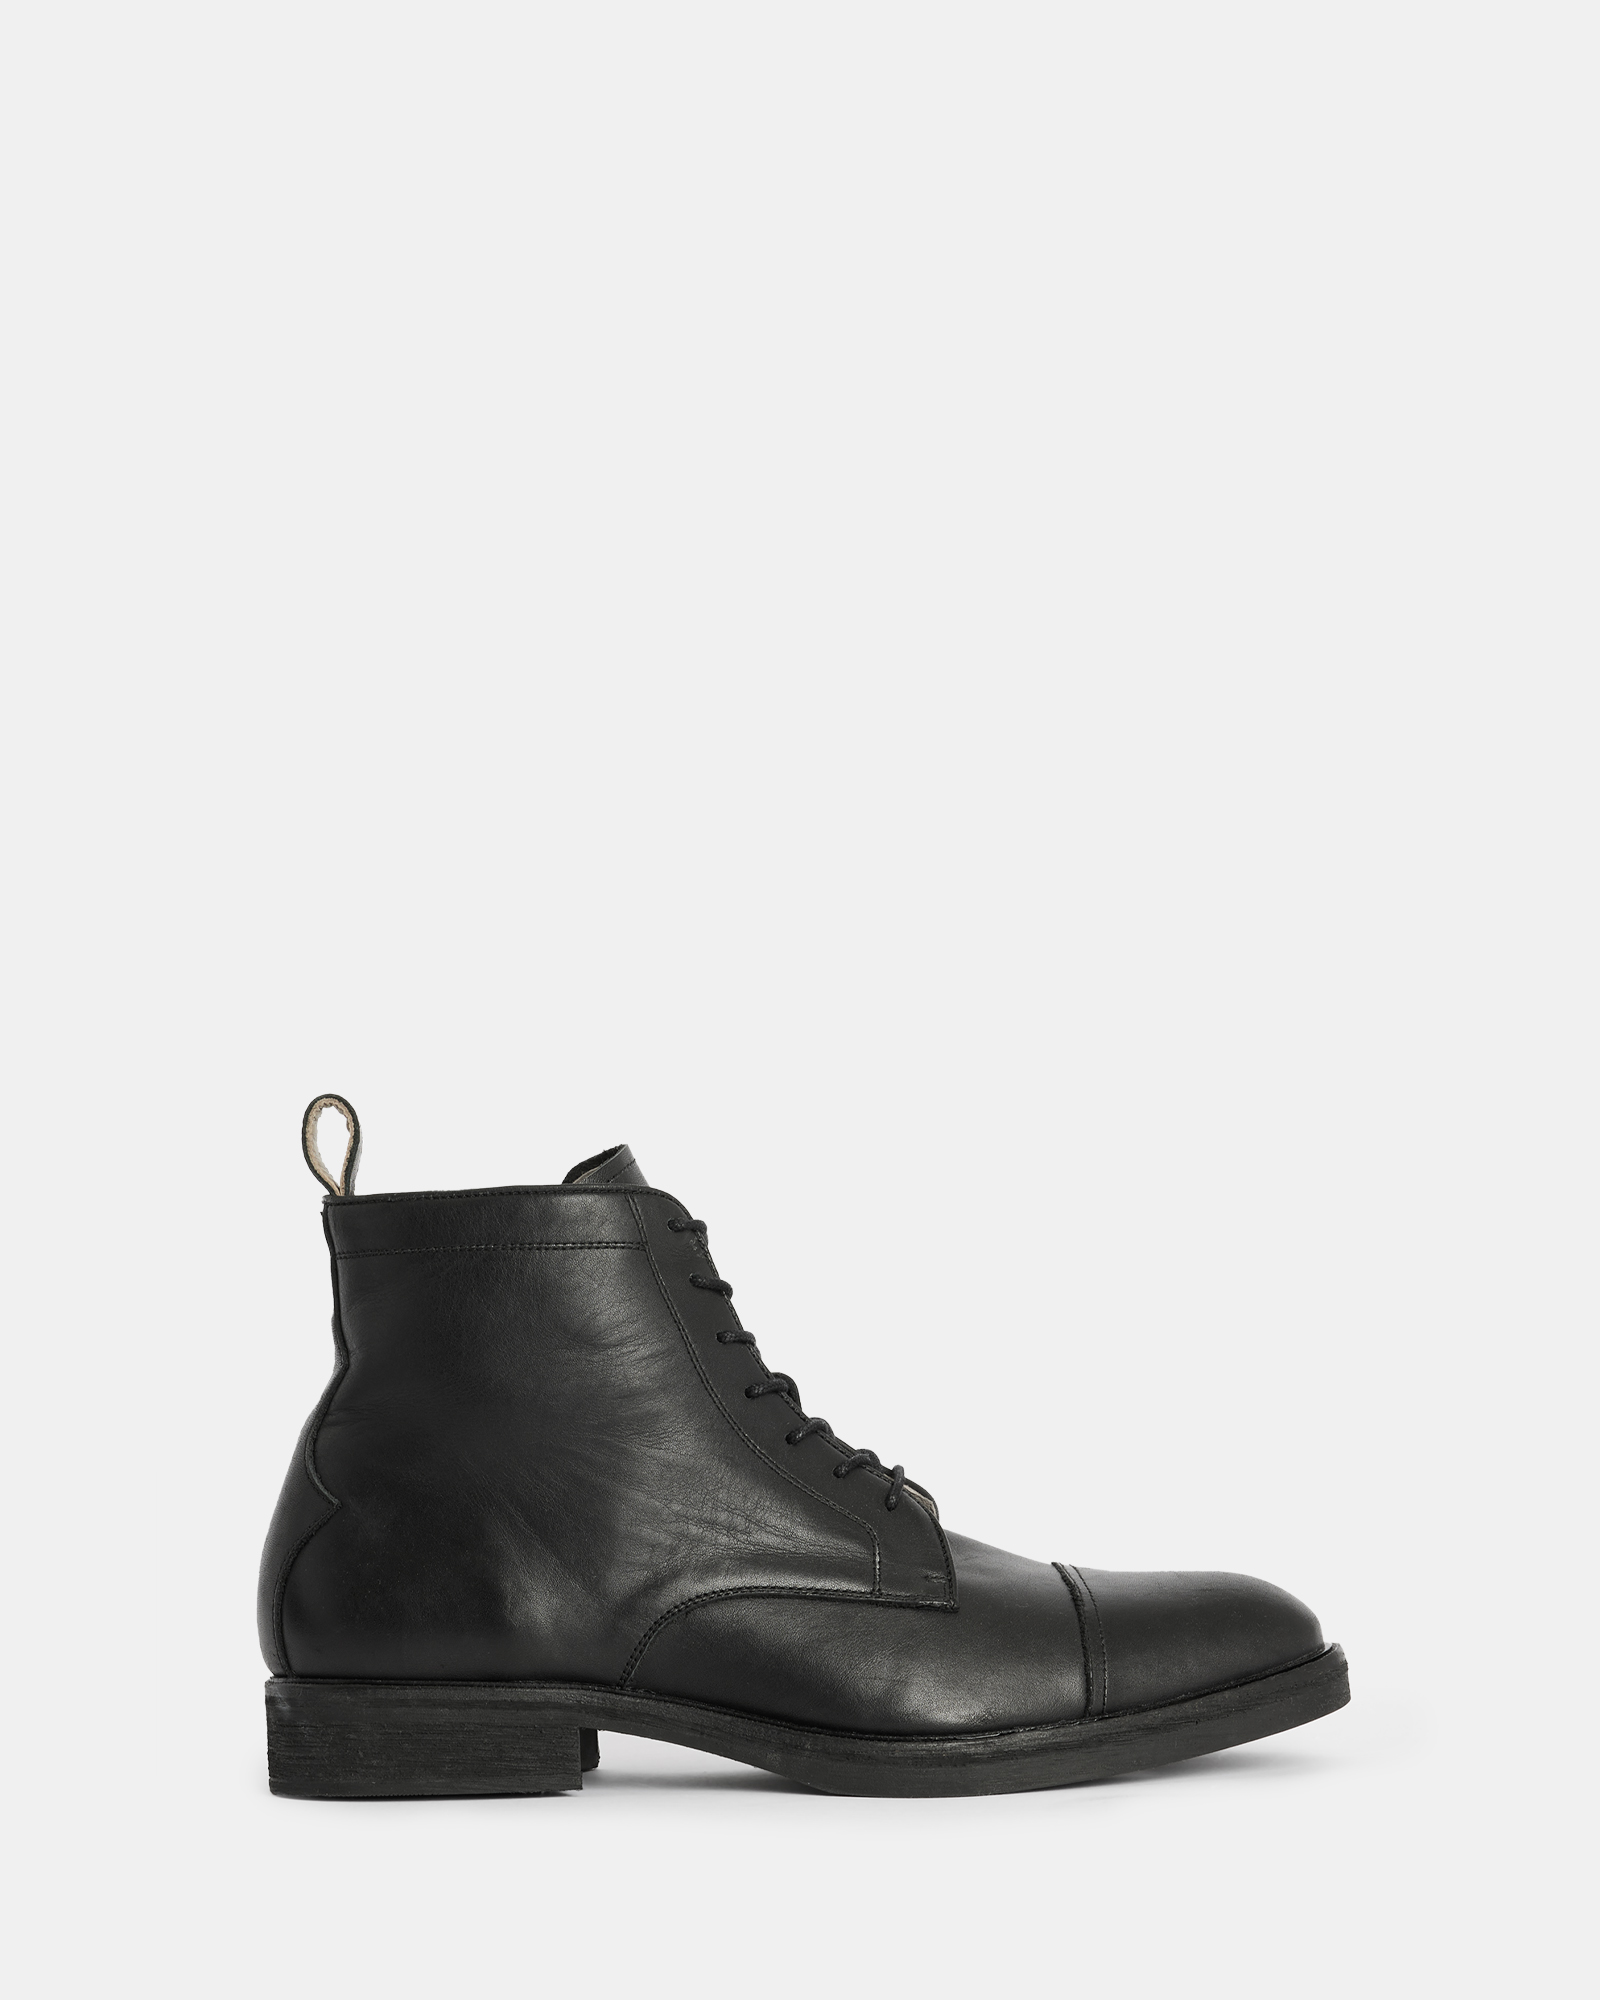 AllSaints Drago Leather Lace Up Boots,, Black, Size: UK